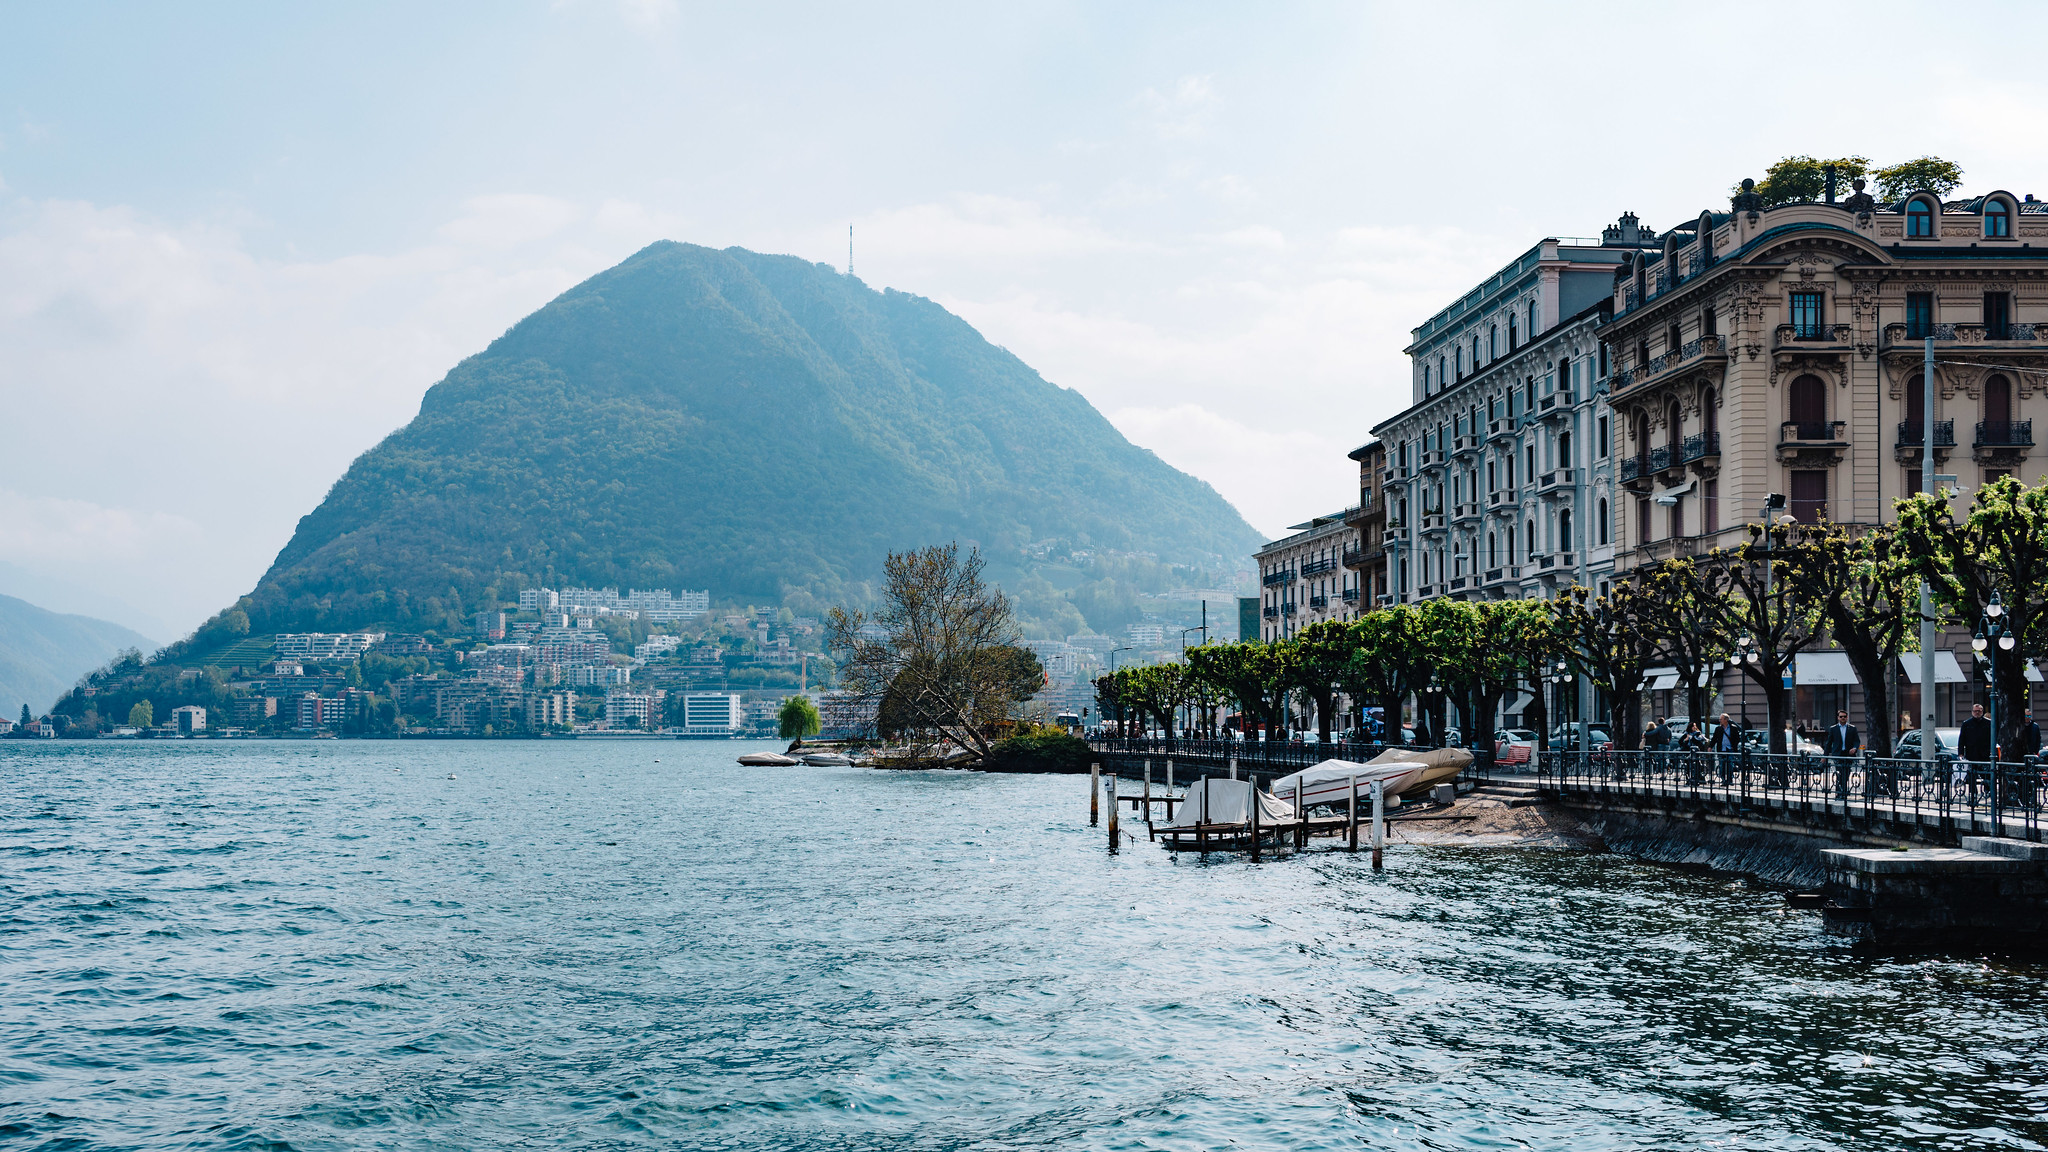 Looking across Lake Lugano